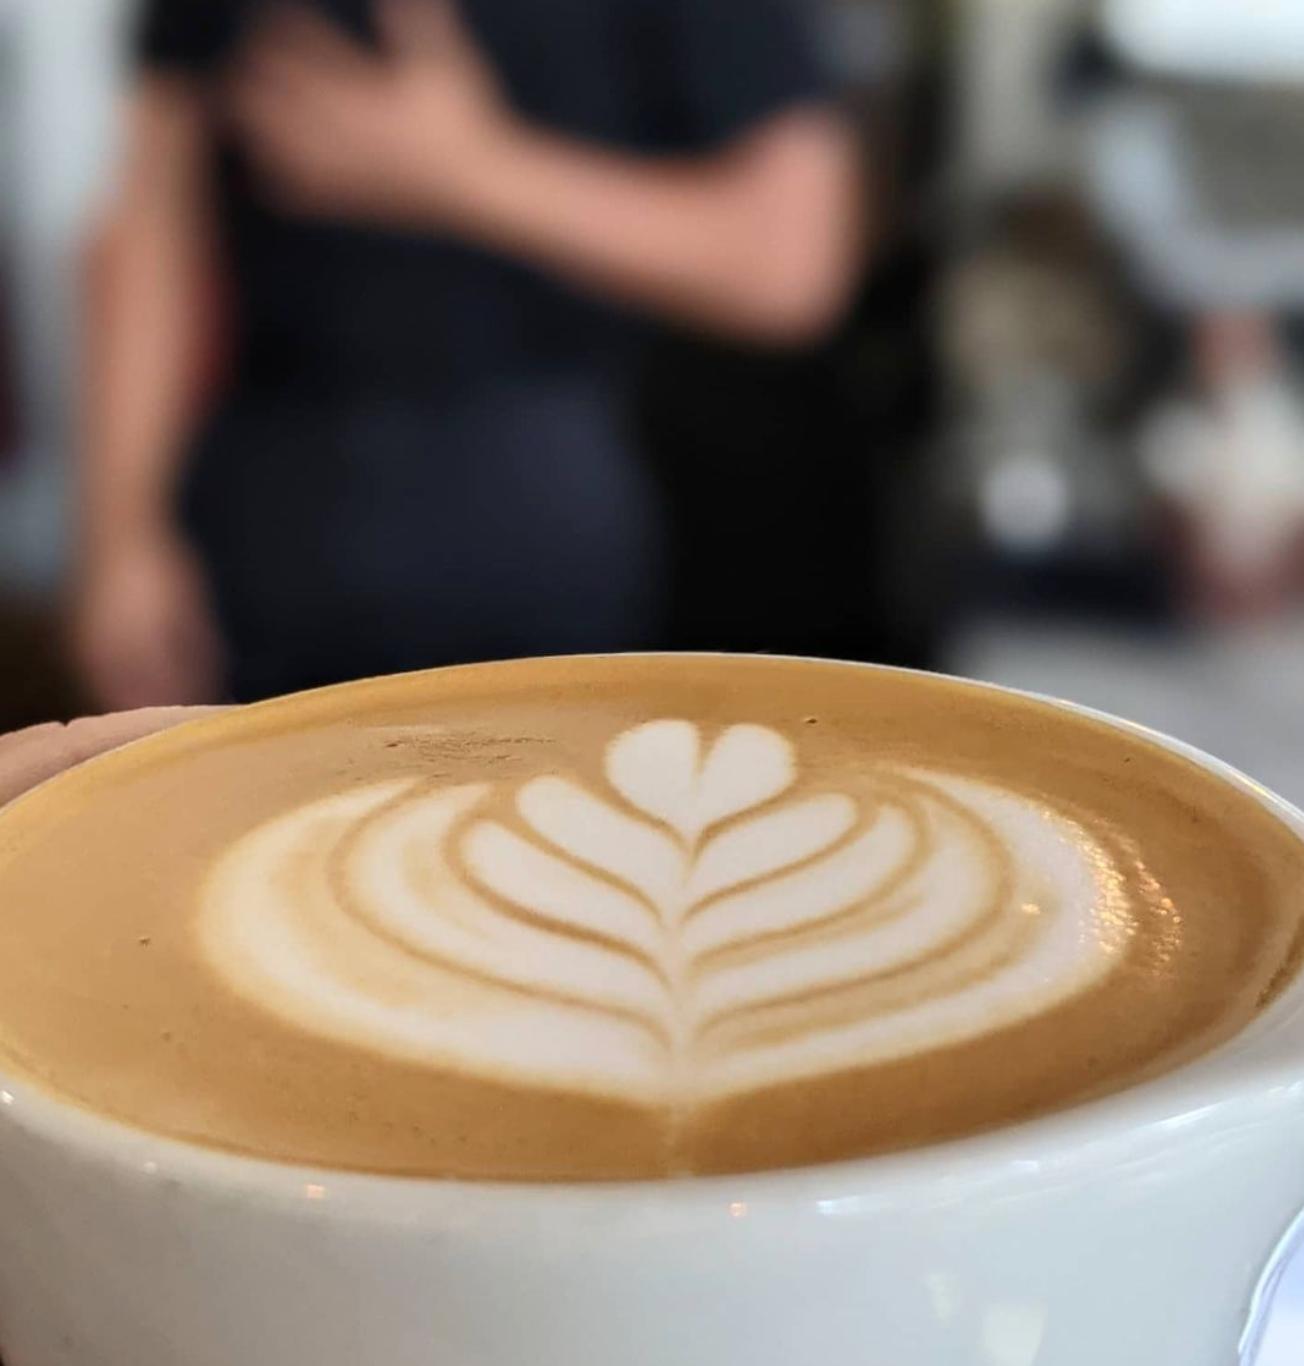 Share your best latte art - cortado